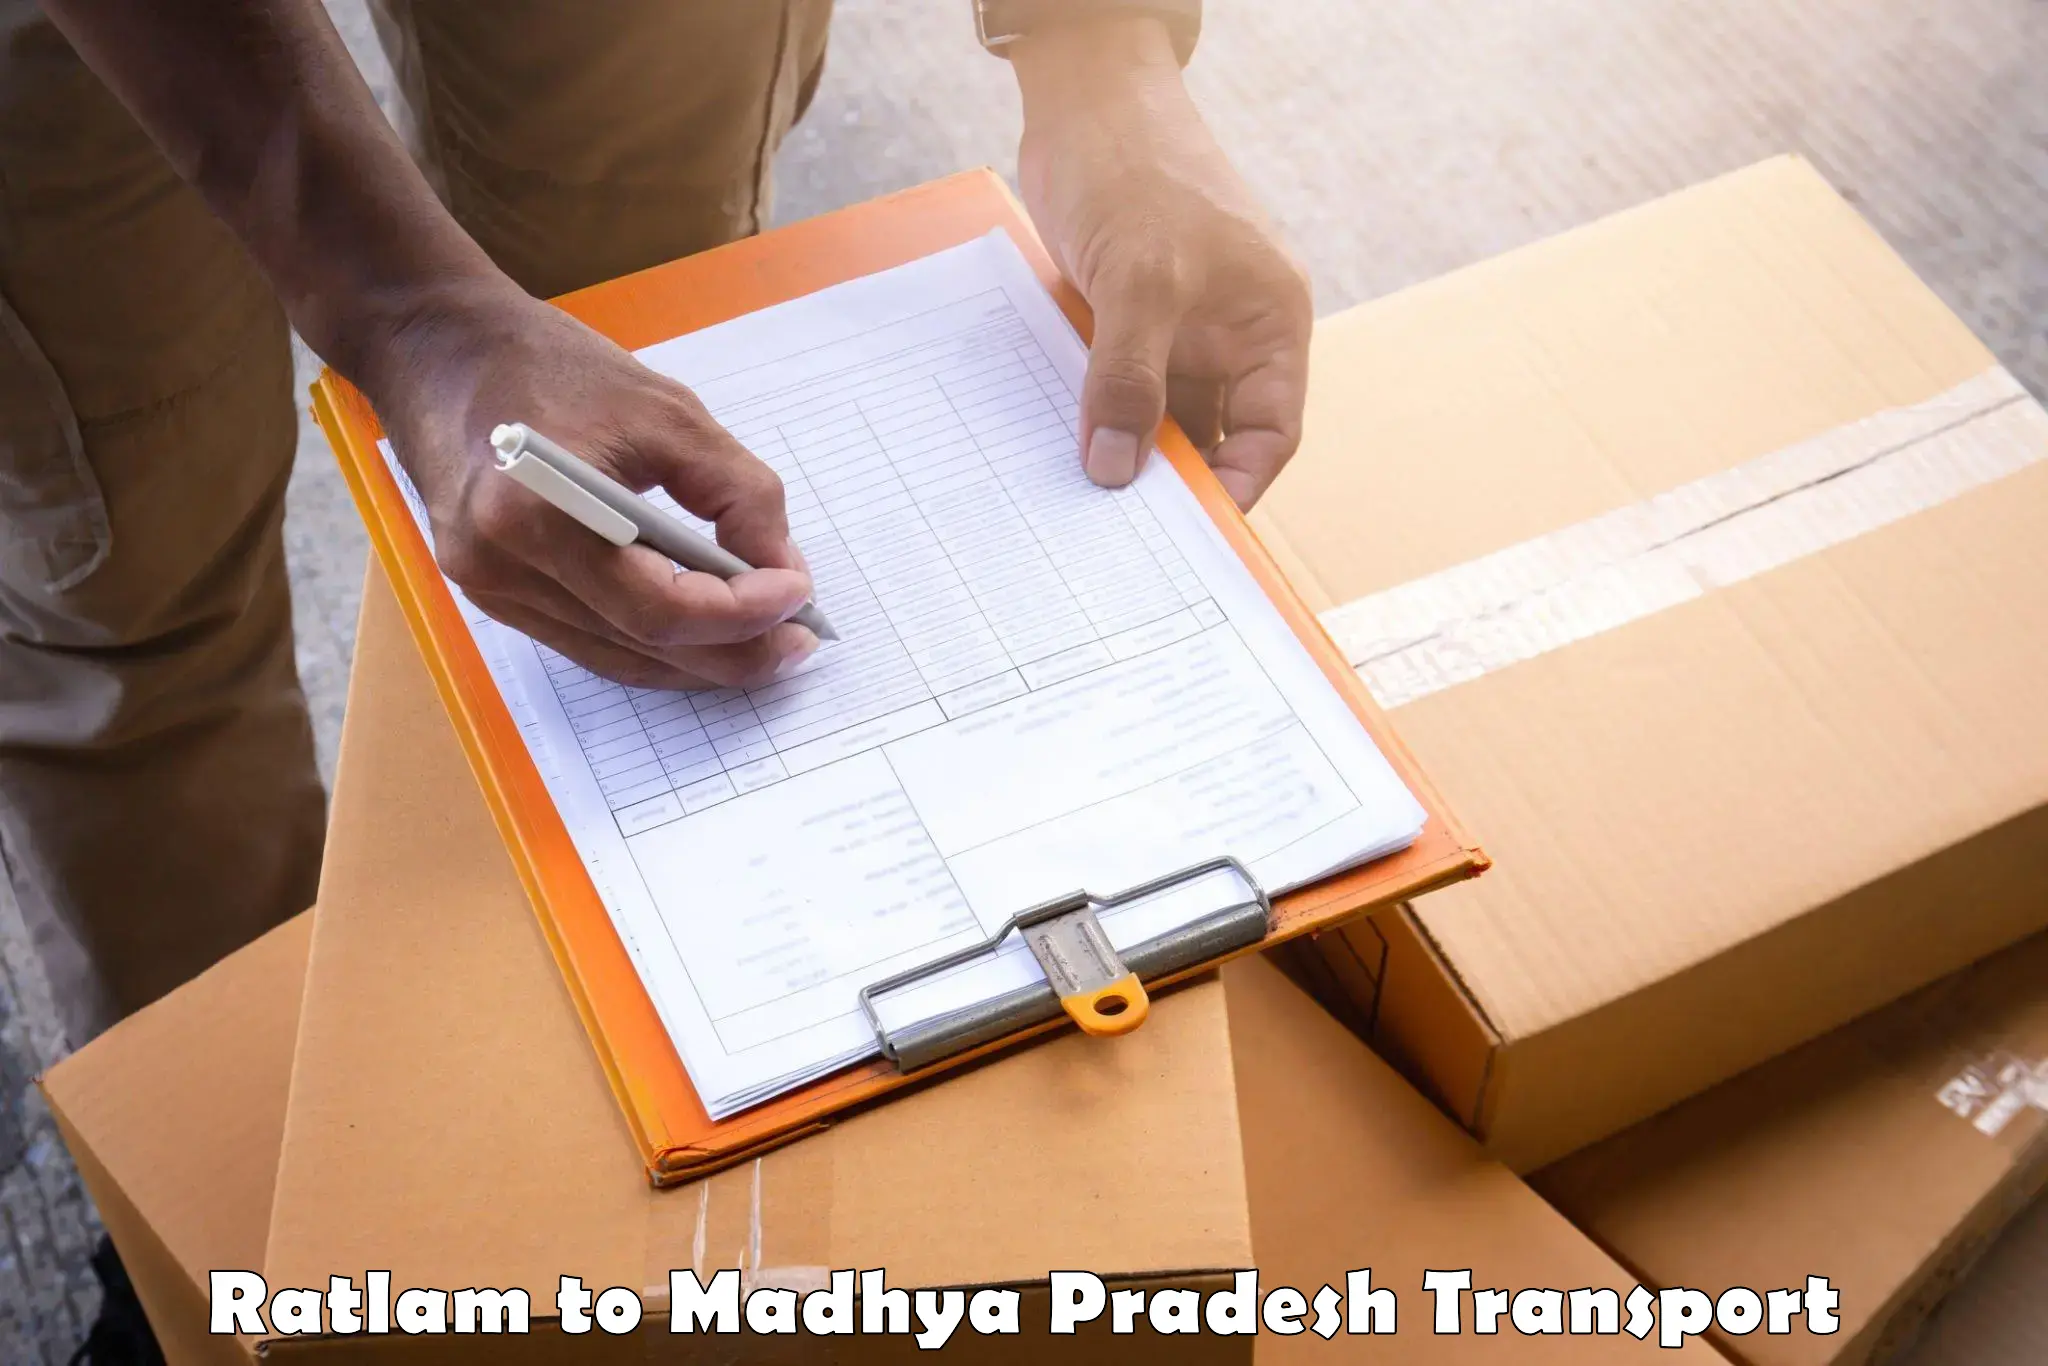 Truck transport companies in India in Ratlam to Nalkheda